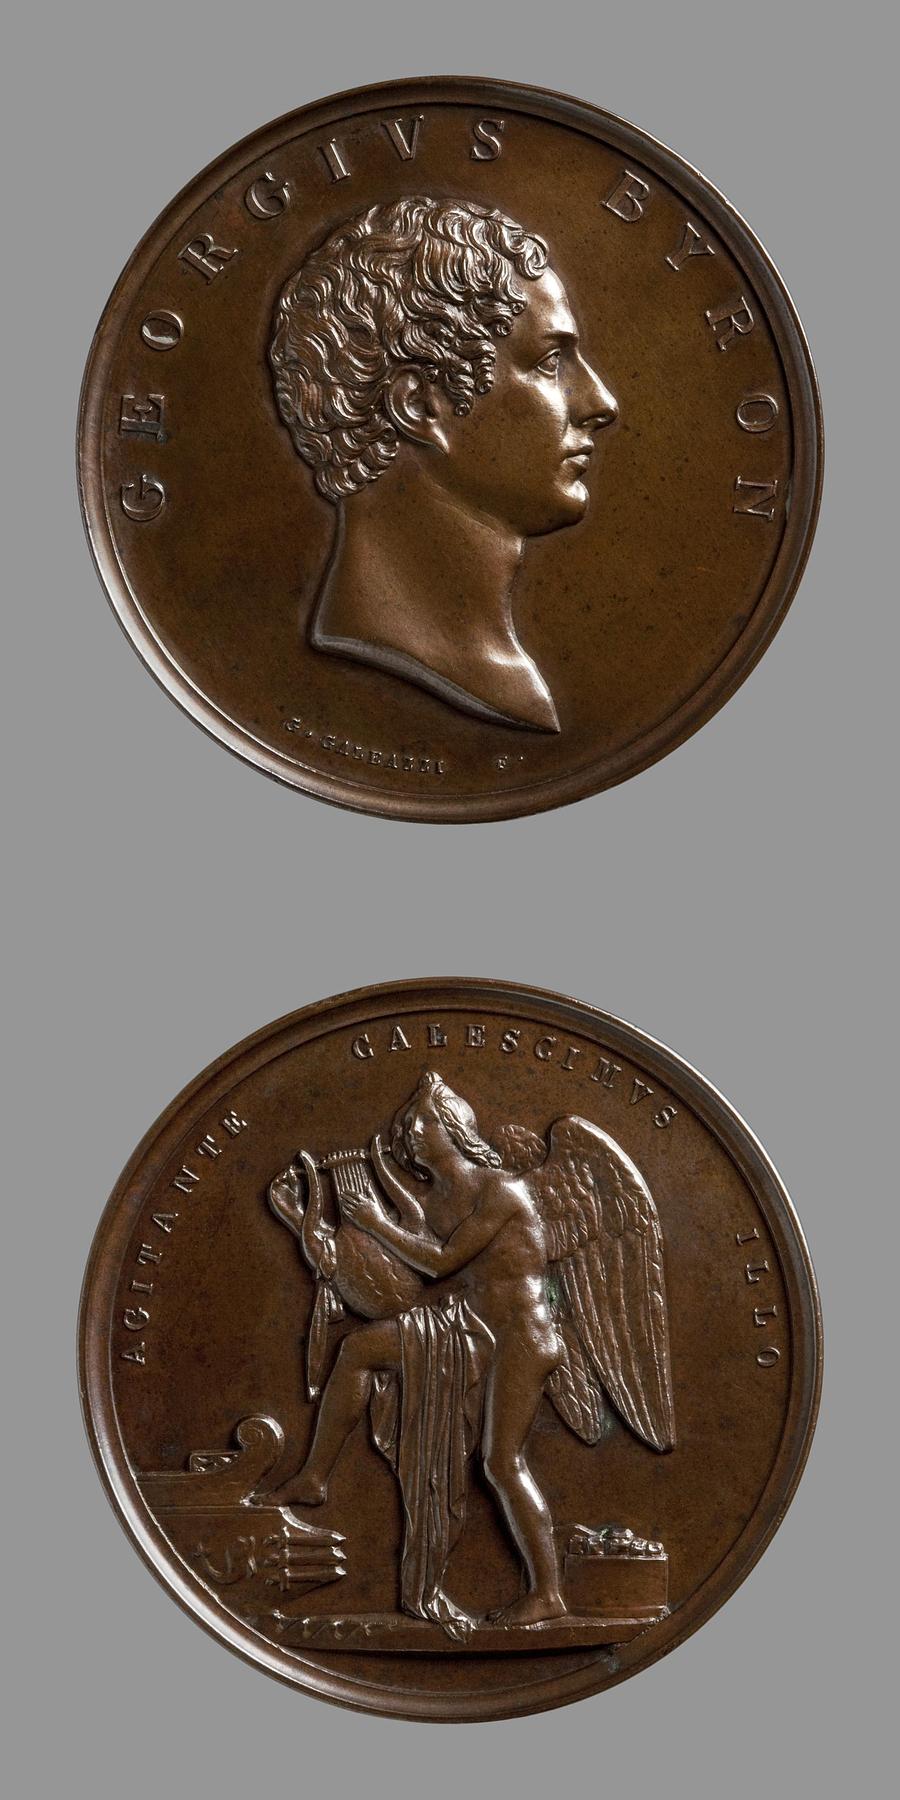 Medaljens forside: George Gordon Byron. Medaljens bagside: Poesiens genius, F18